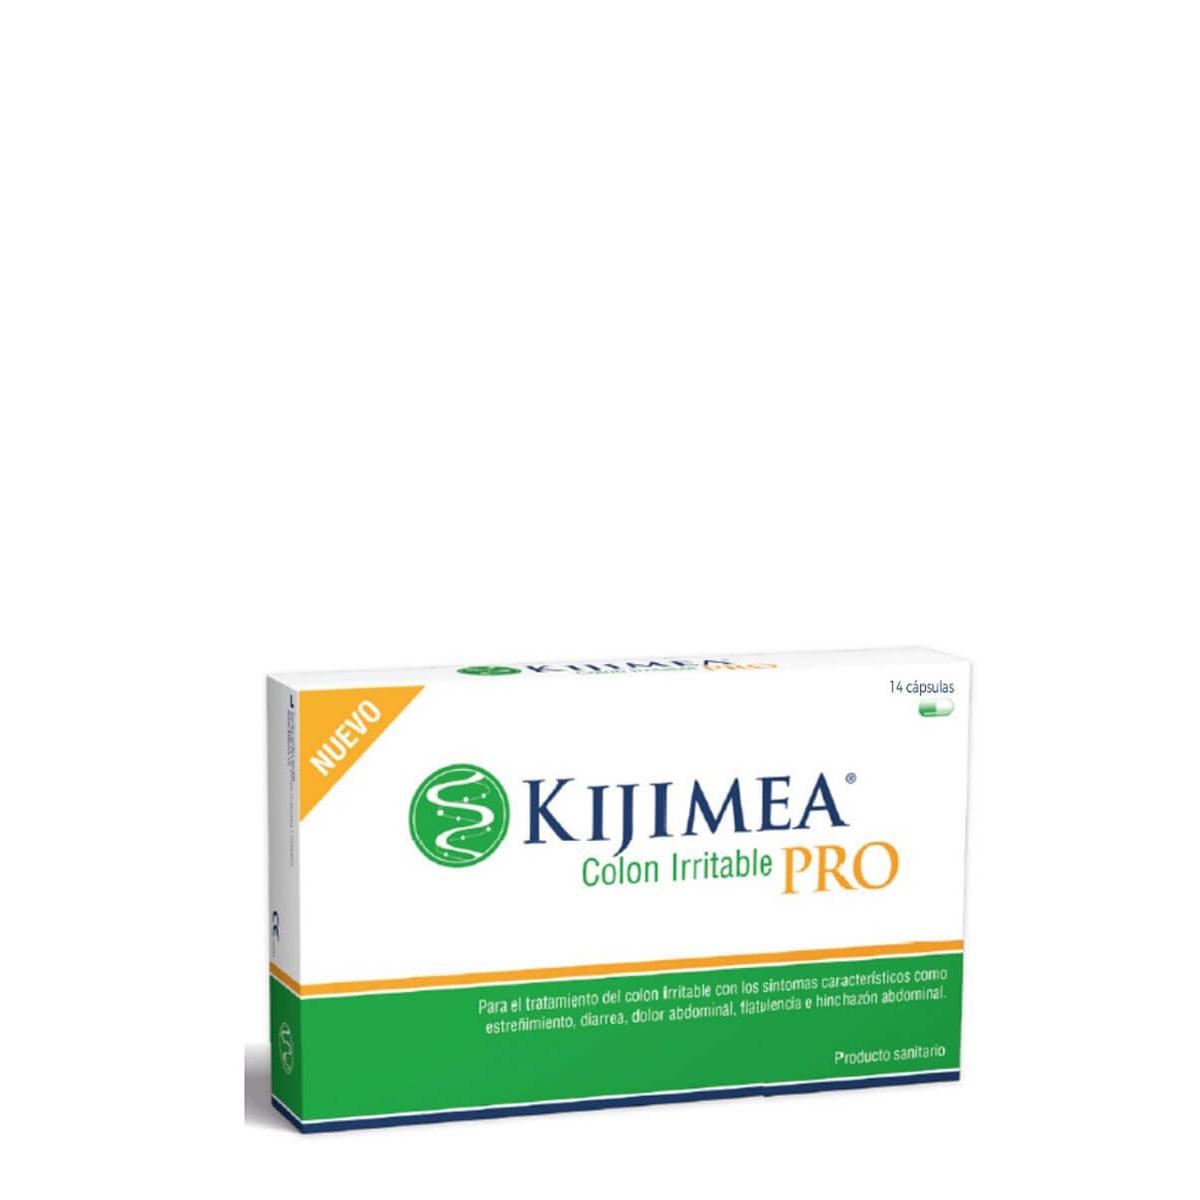 Kijimea - Colon Irritabile Pro by Perrigo, 14 capsules 